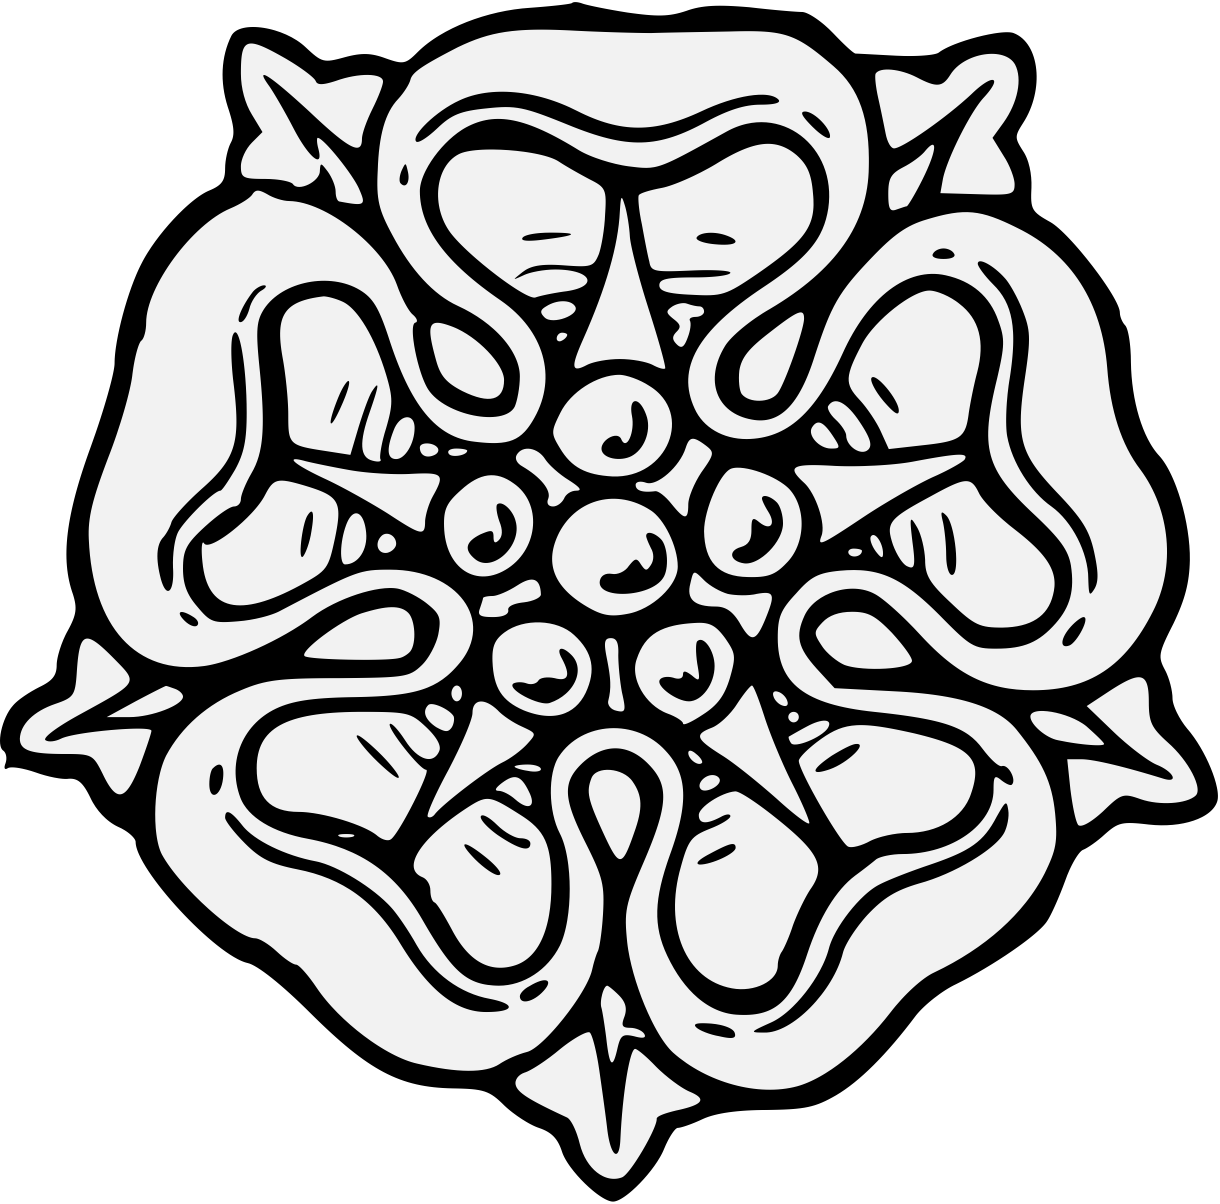 Pdf - Heraldic Rose (1220x1204)